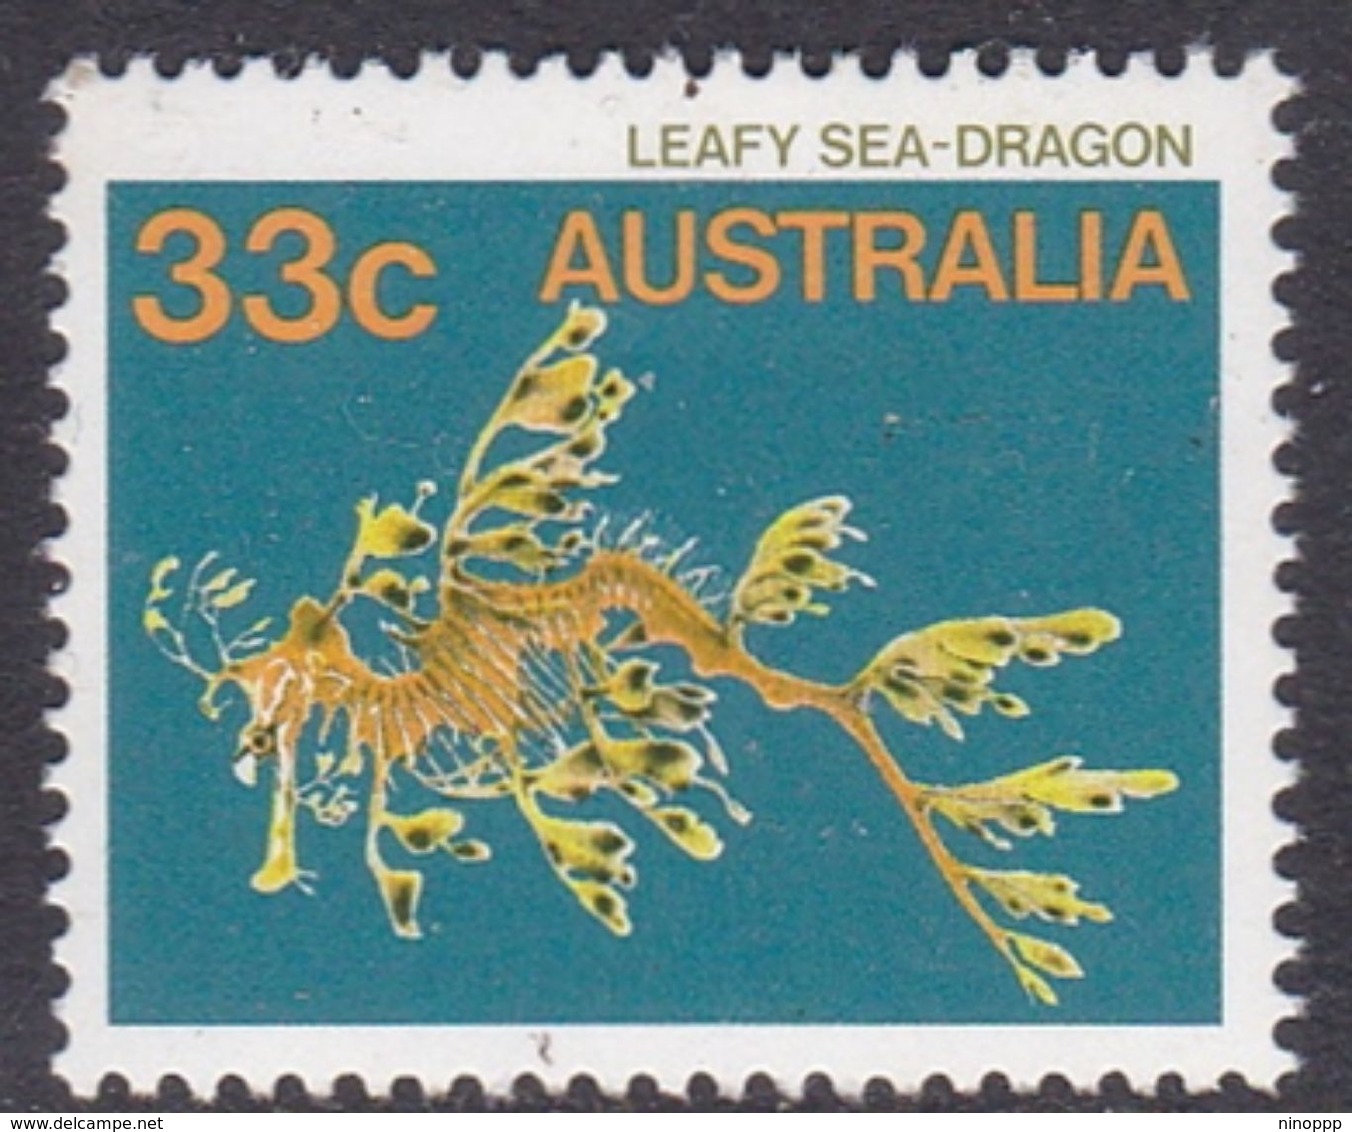 Australia ASC 964 1985 Marine Life Definitive 33c Sea-Dragon, Mint Never Hinged - Mint Stamps